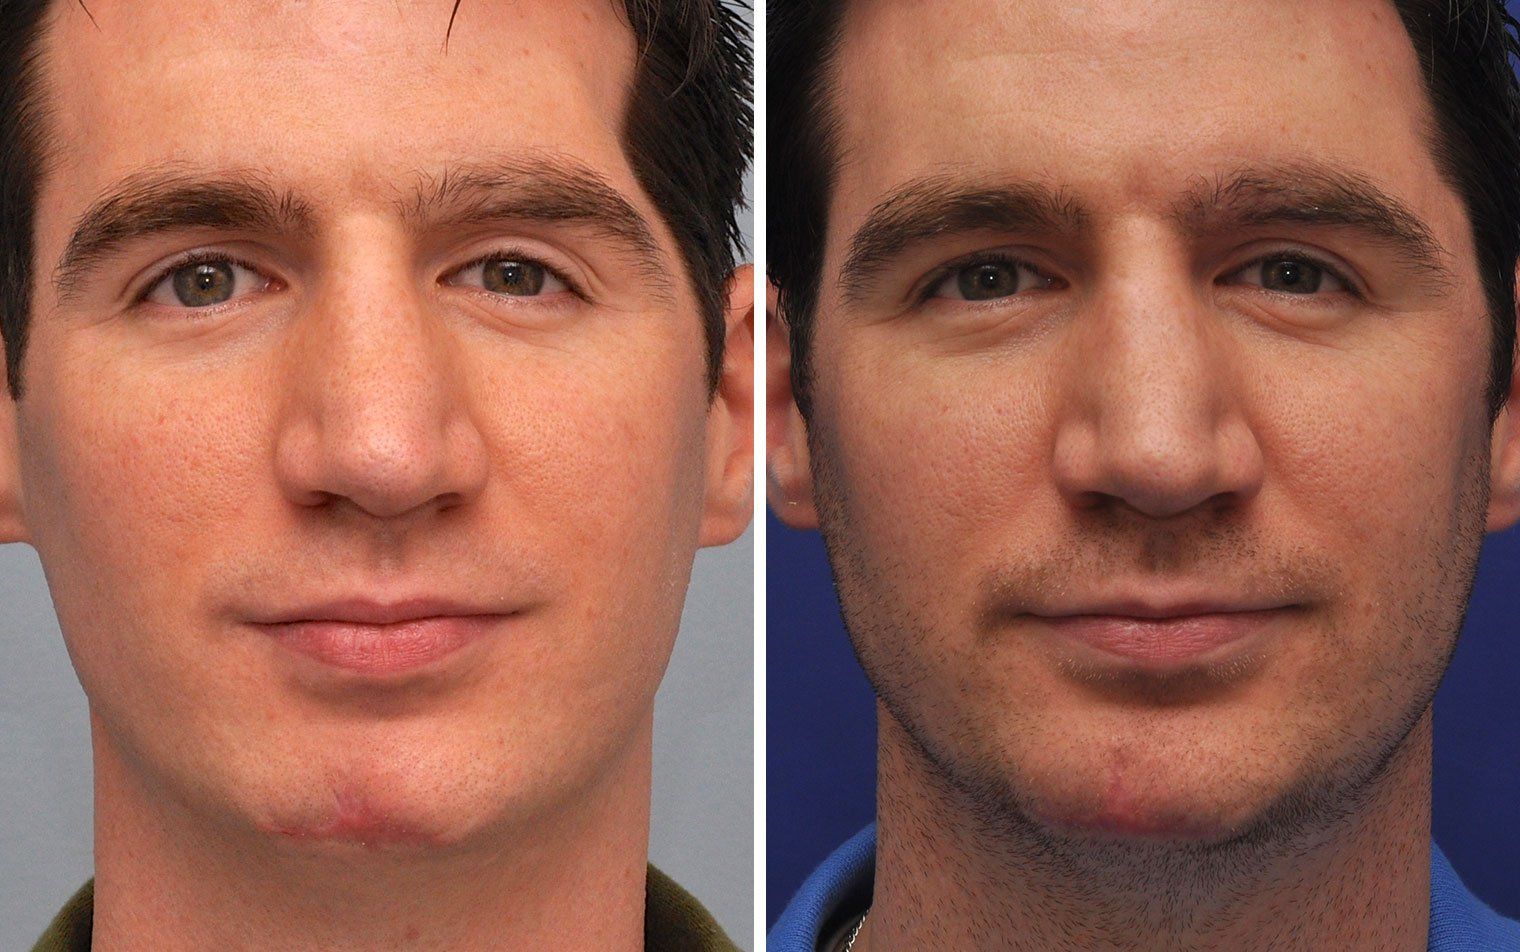 Facial scar plastic surgery